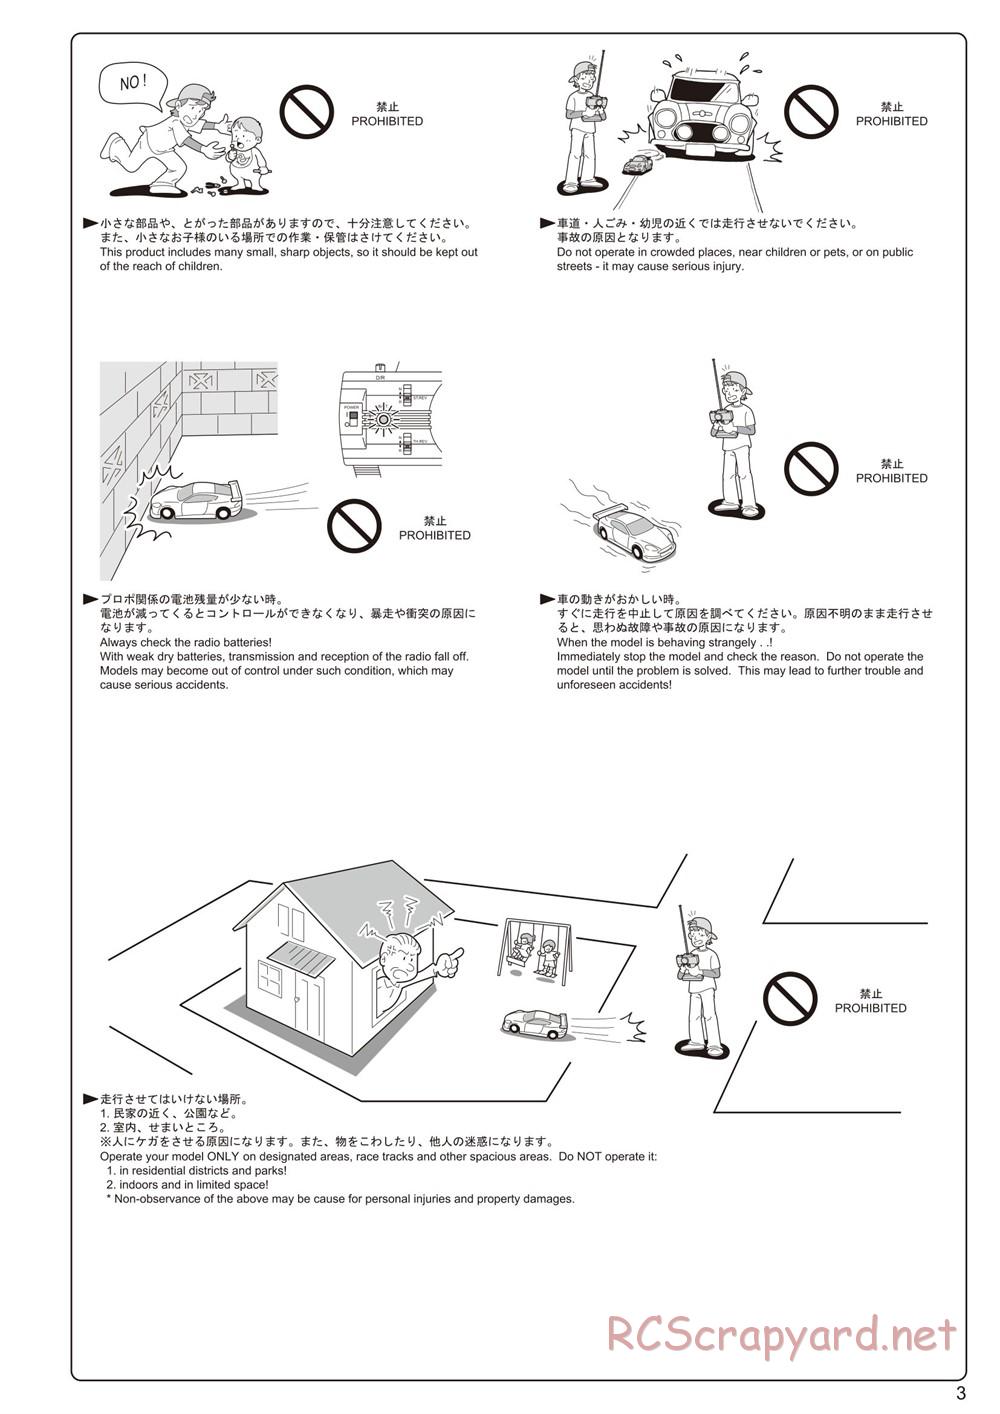 Kyosho - Lazer ZX-6 - Manual - Page 3